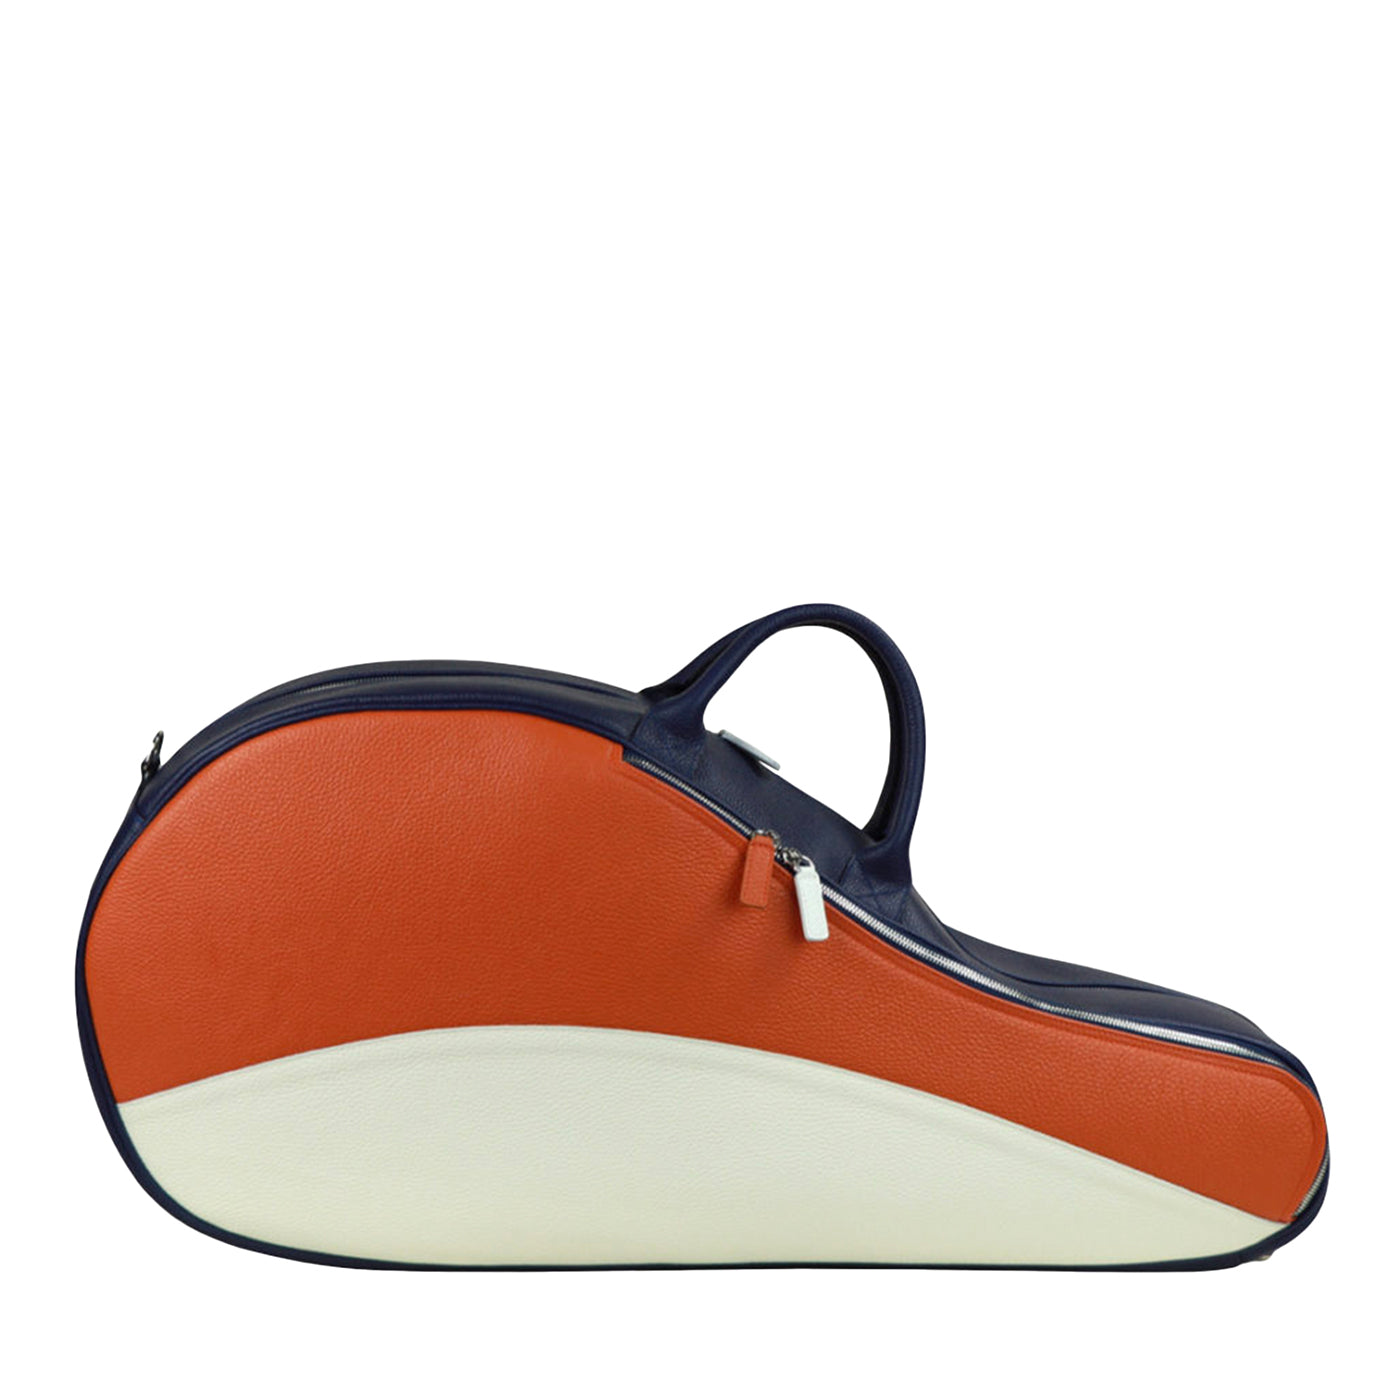 Original Orange/White/Blue Leather Tennis Bag - Main view